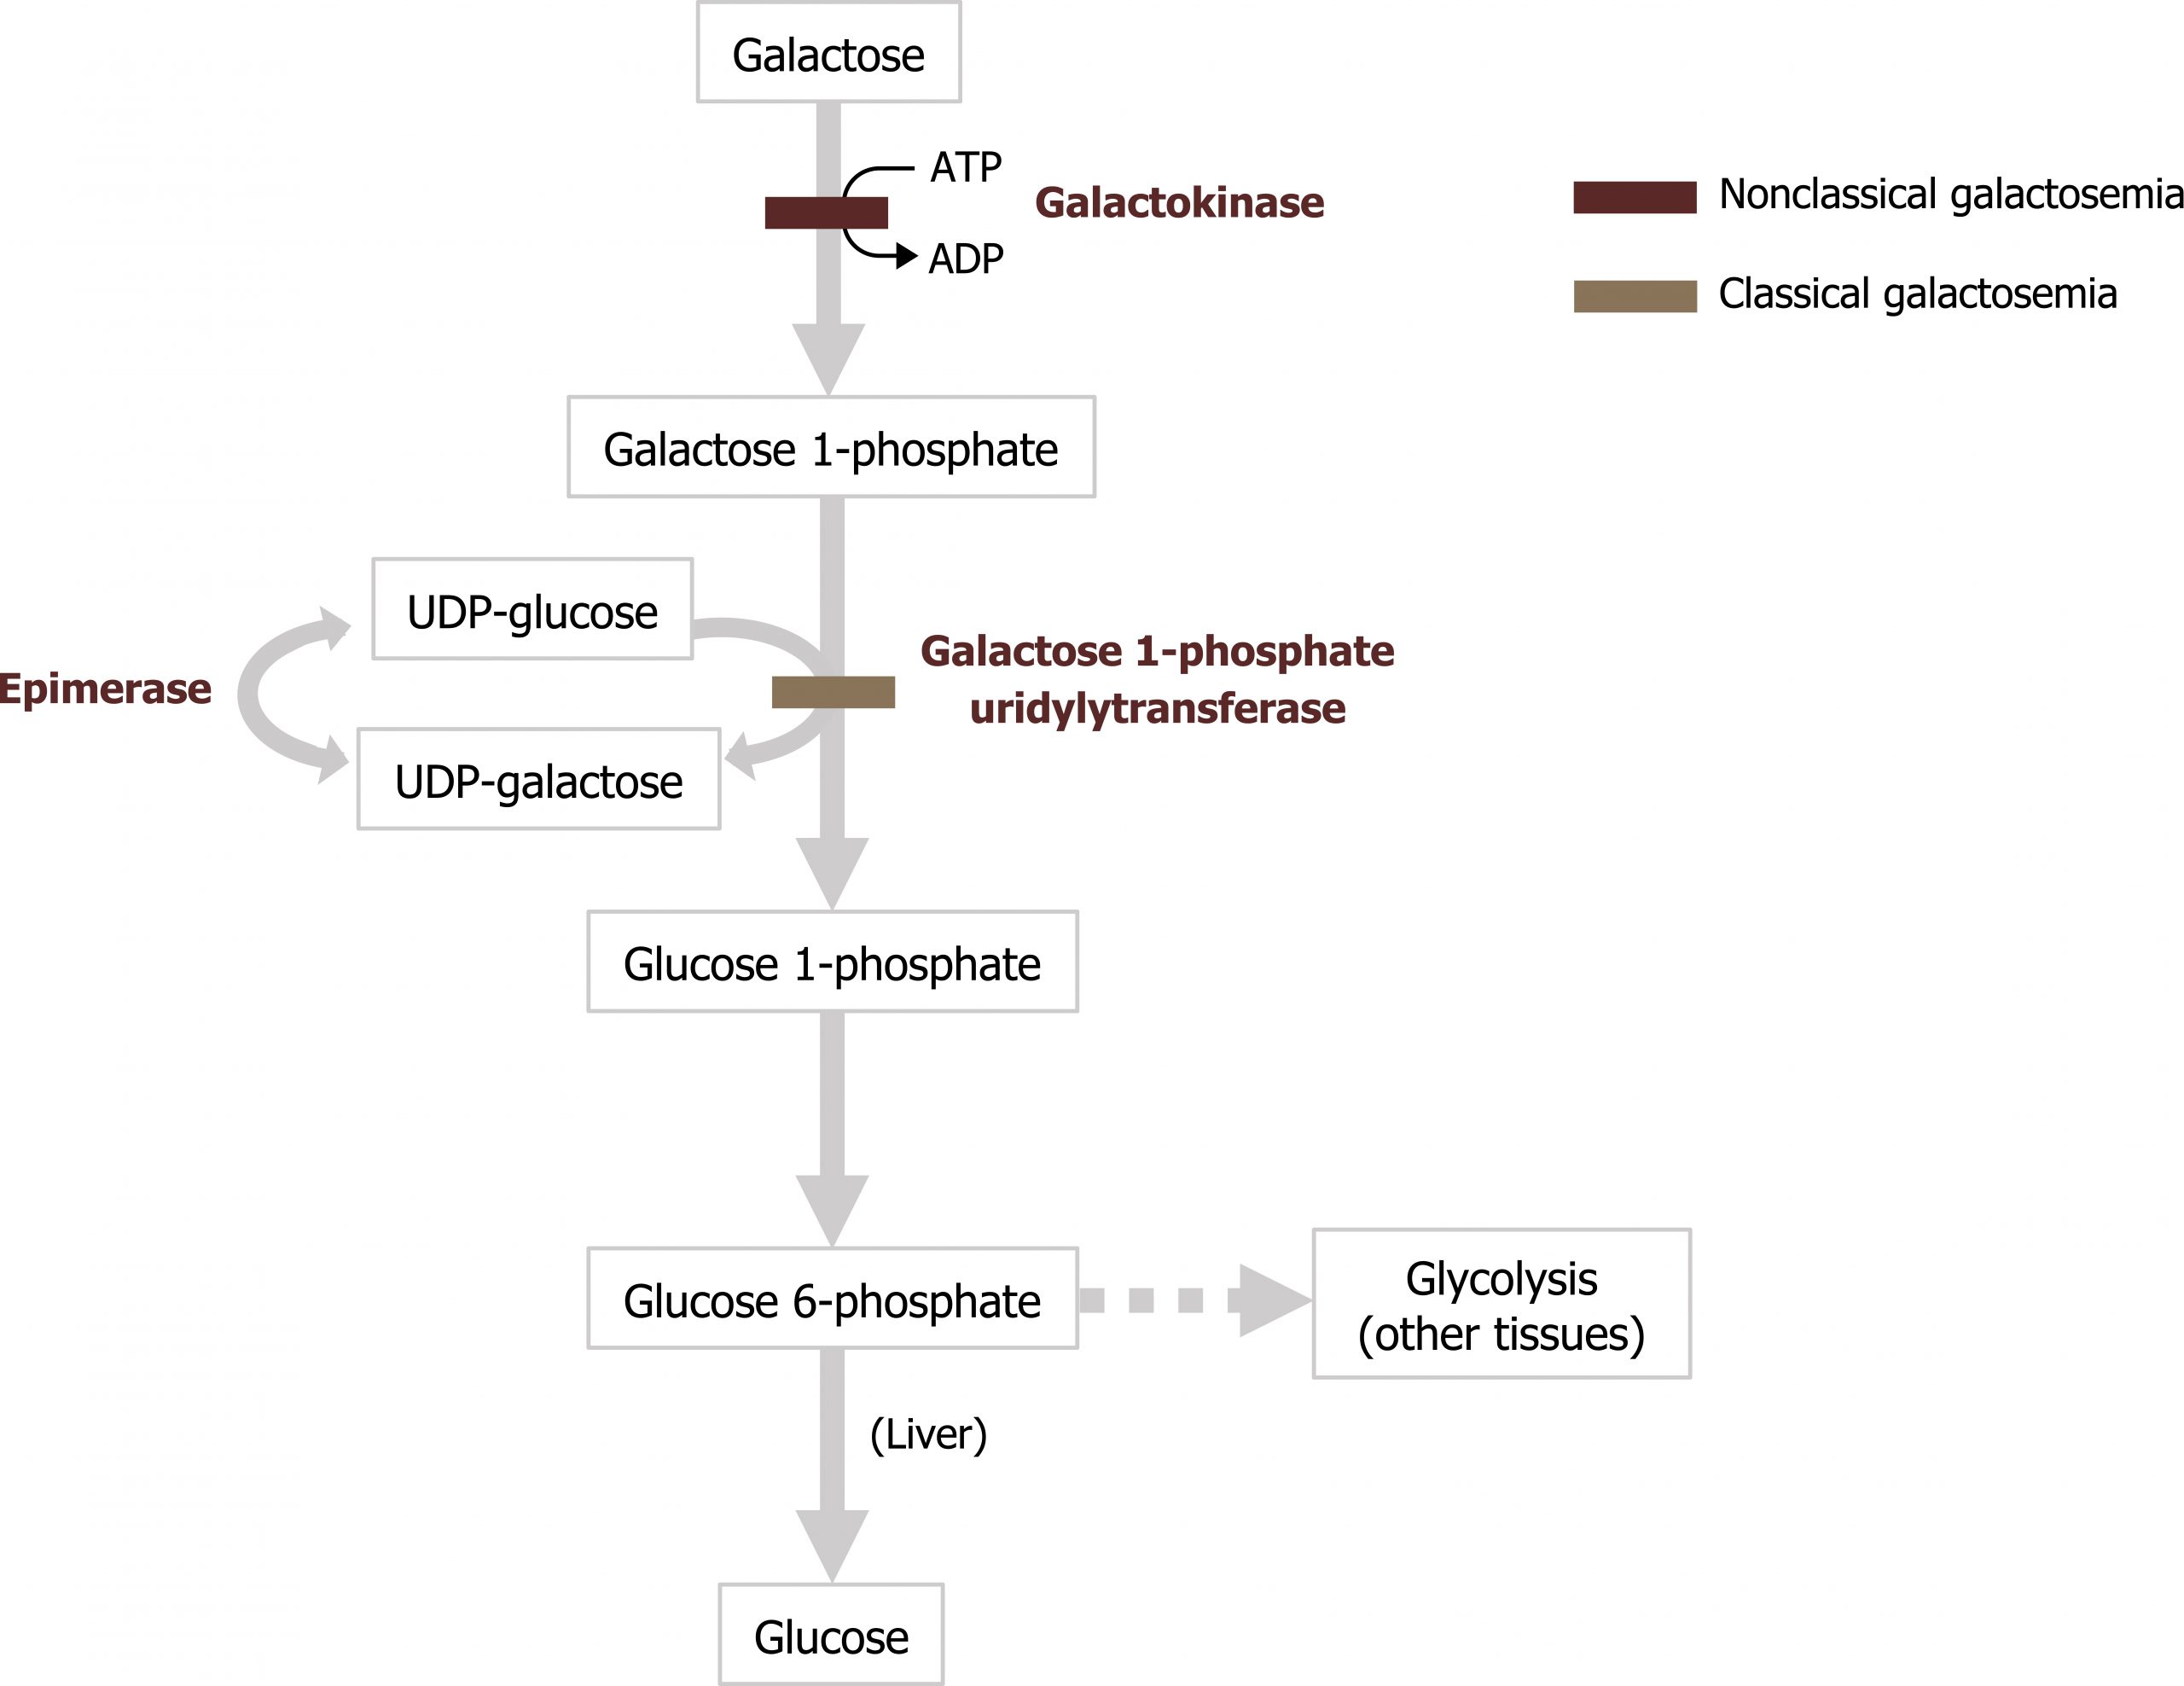 Galactose arrow labeled nonclassical galactosemia with ATP arrow ADP and enzyme galactokinase to galactose-1-phosphate arrow labeled classical galactosemia and enzyme galactose 1-phosphate uridylyltransferase to glucose-1-phosphate arrow glucose-6-phosphate arrow text liver glucose. At classical galactosemia arrow, UDP glucose arrow UDP galactose arrow enzyme epimerase arrow UDP-glucose. Glucose-6-phosphate arrow glycolysis (other tissues).